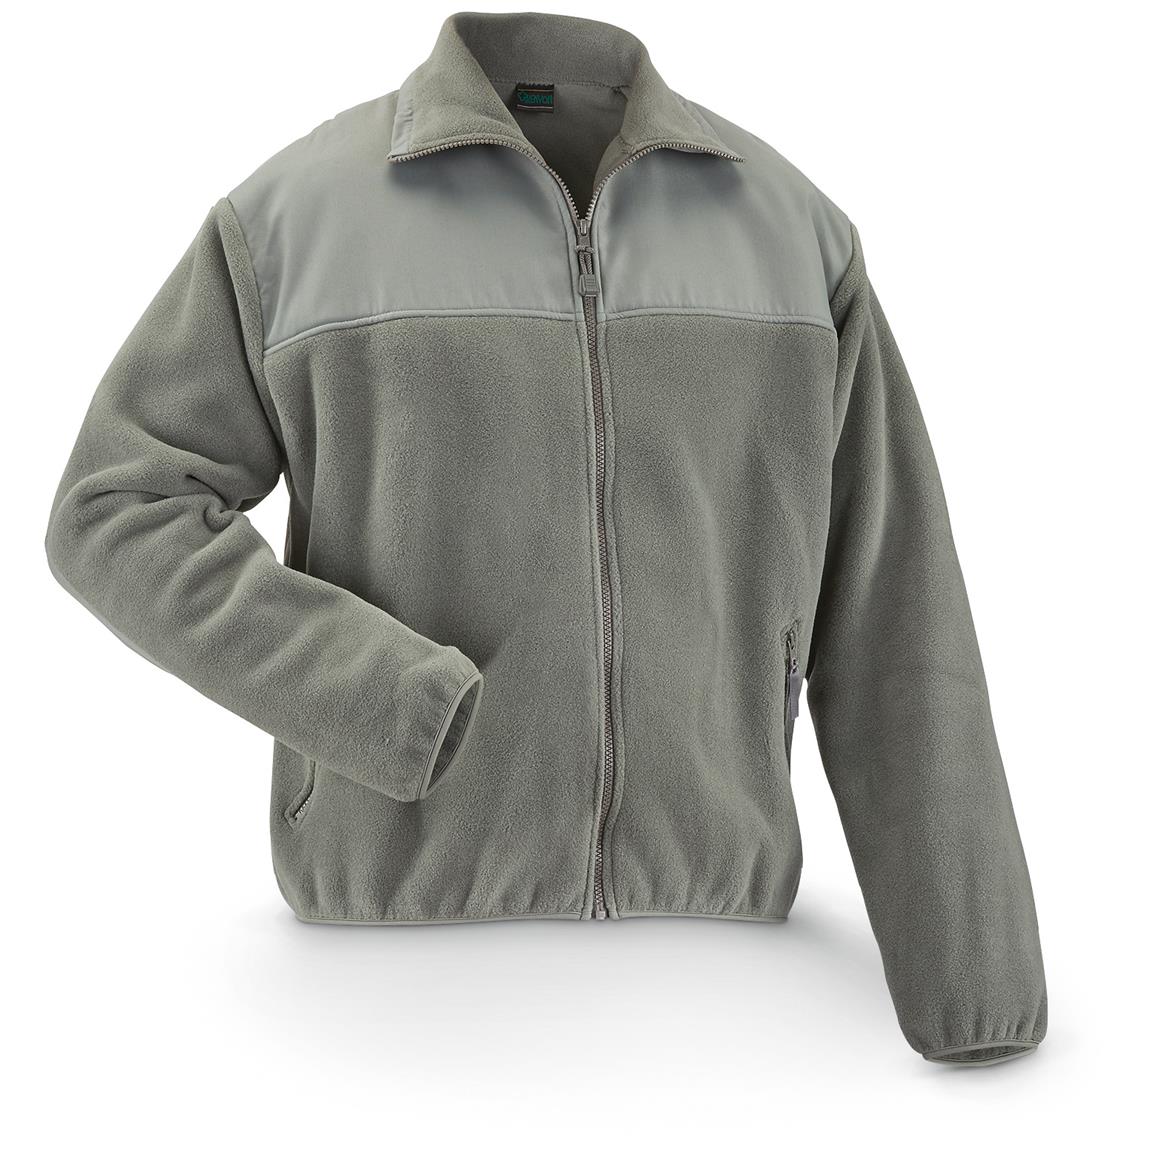 U.S. Military Surplus Polartec Enhanced Fleece Jacket, New - 661387, Insulated Jackets & Coats ...